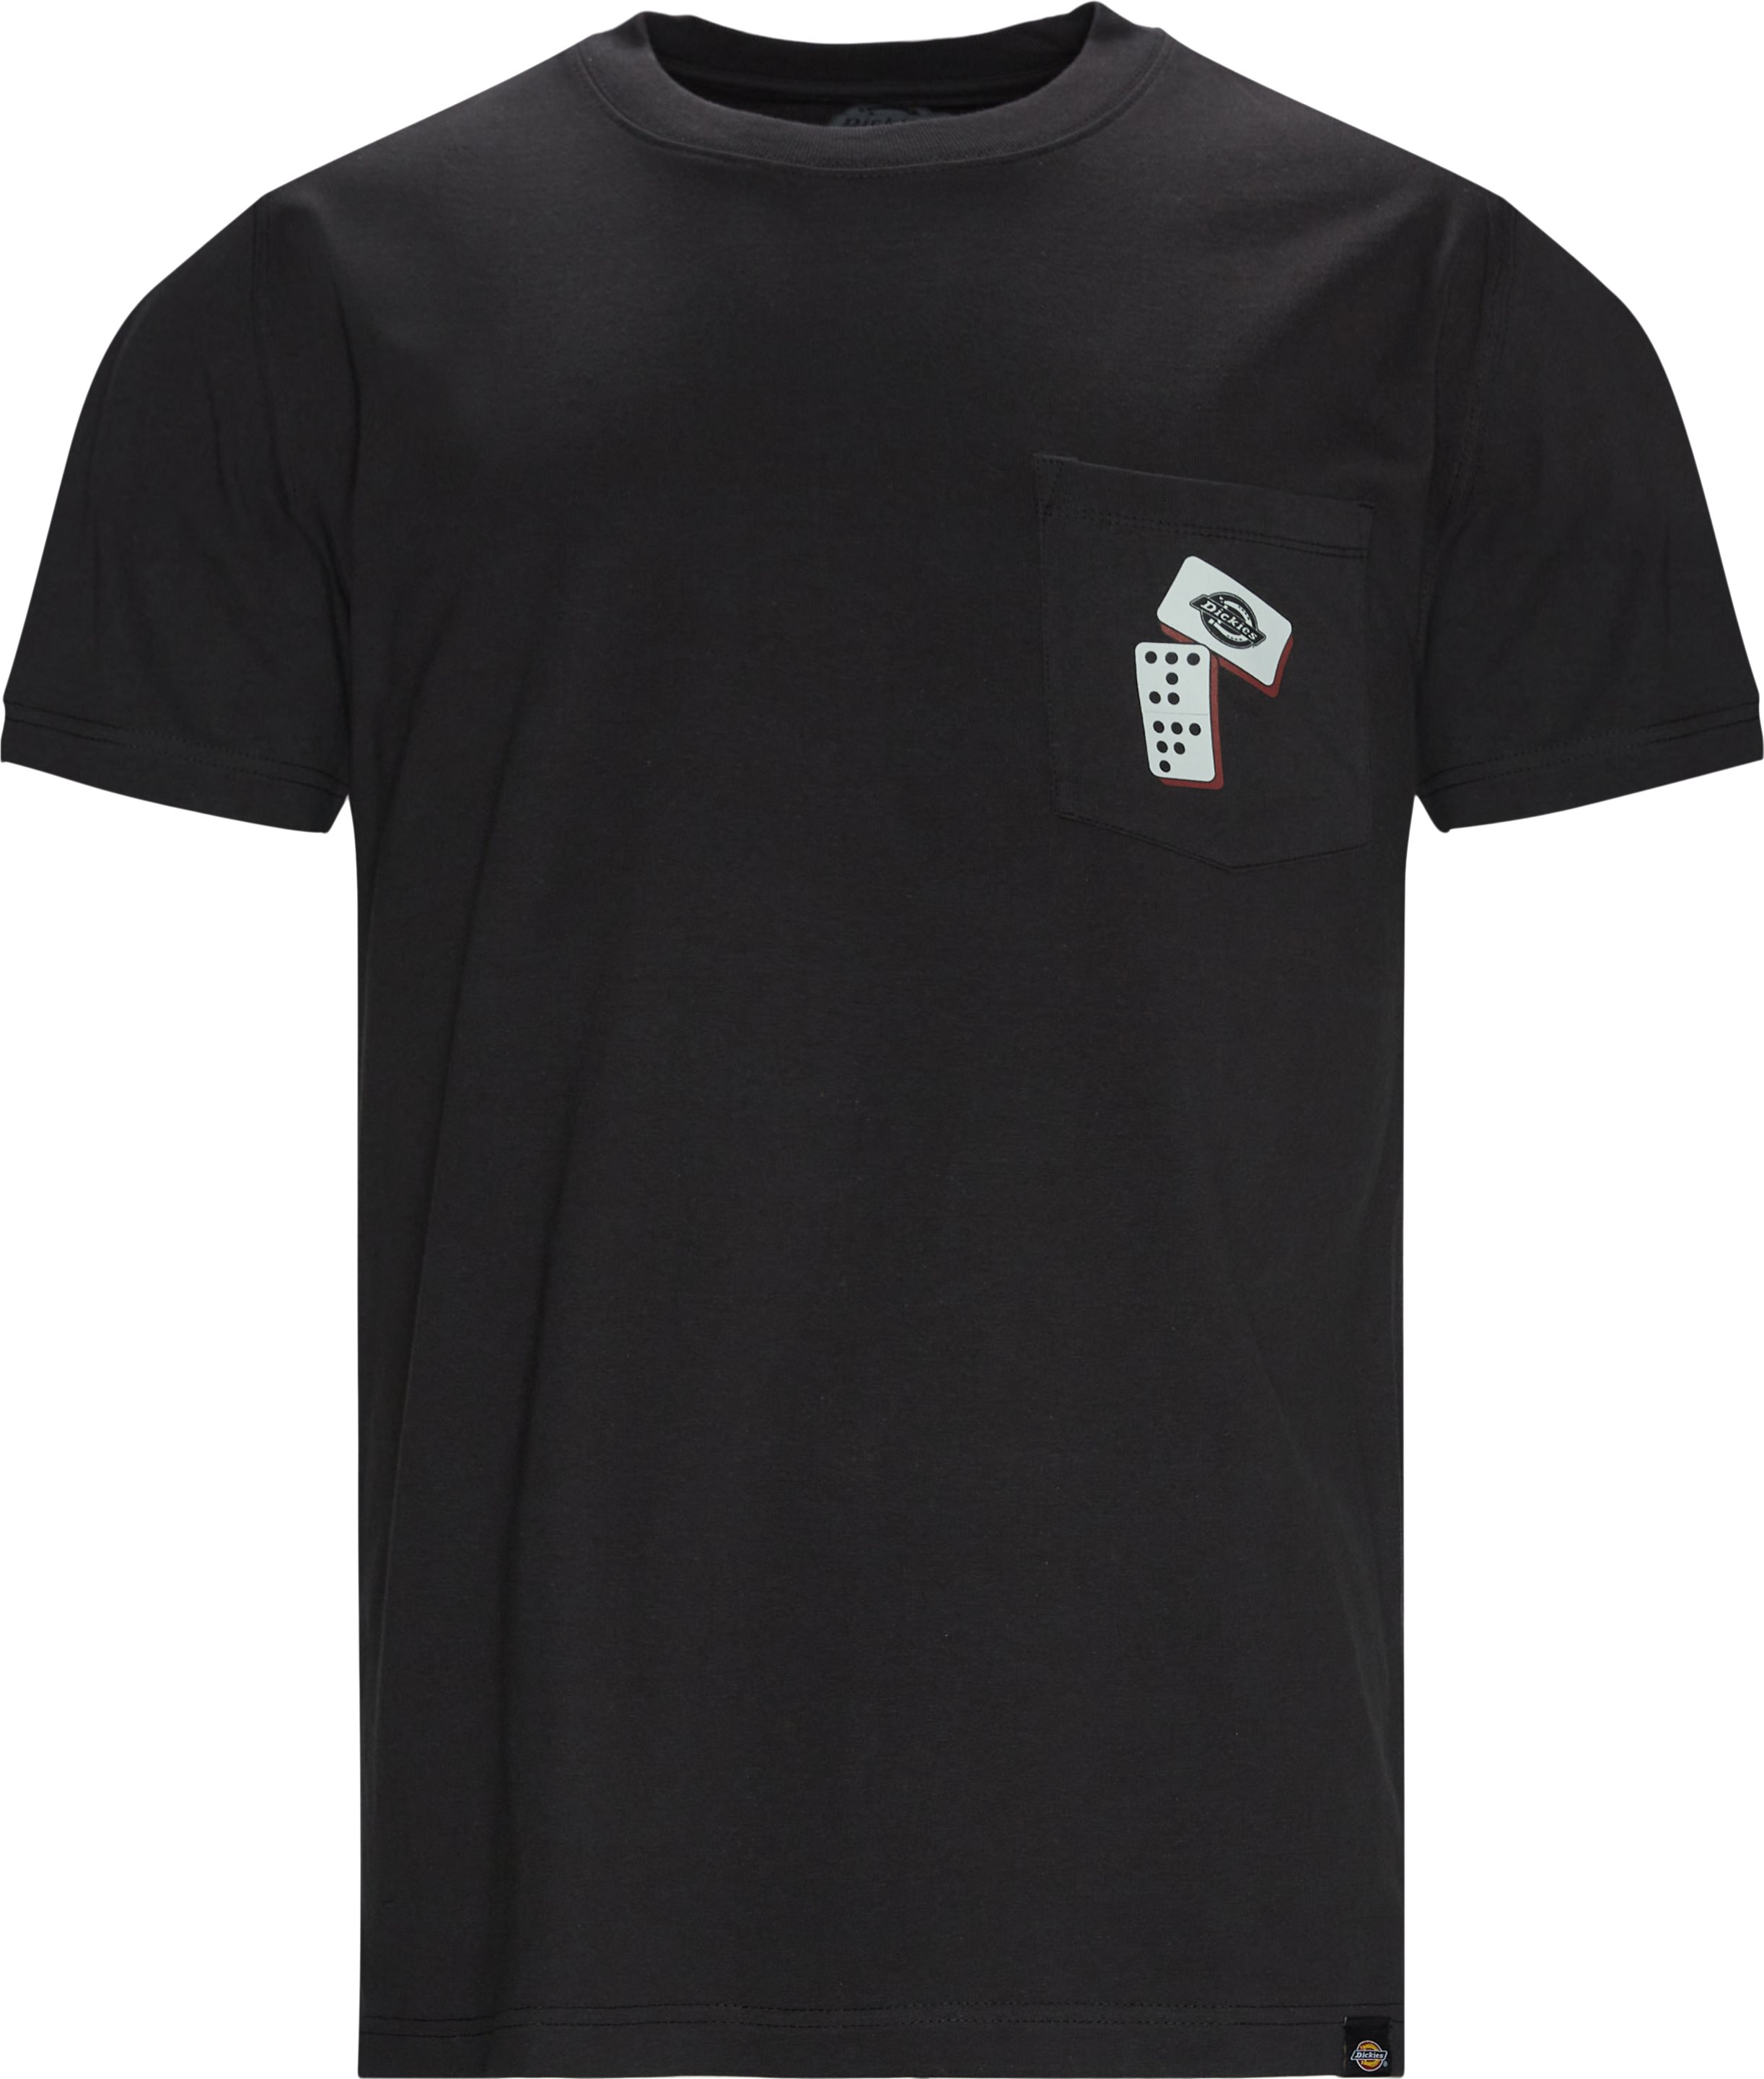 Jf Graphic Tee - T-shirts - Regular fit - Svart